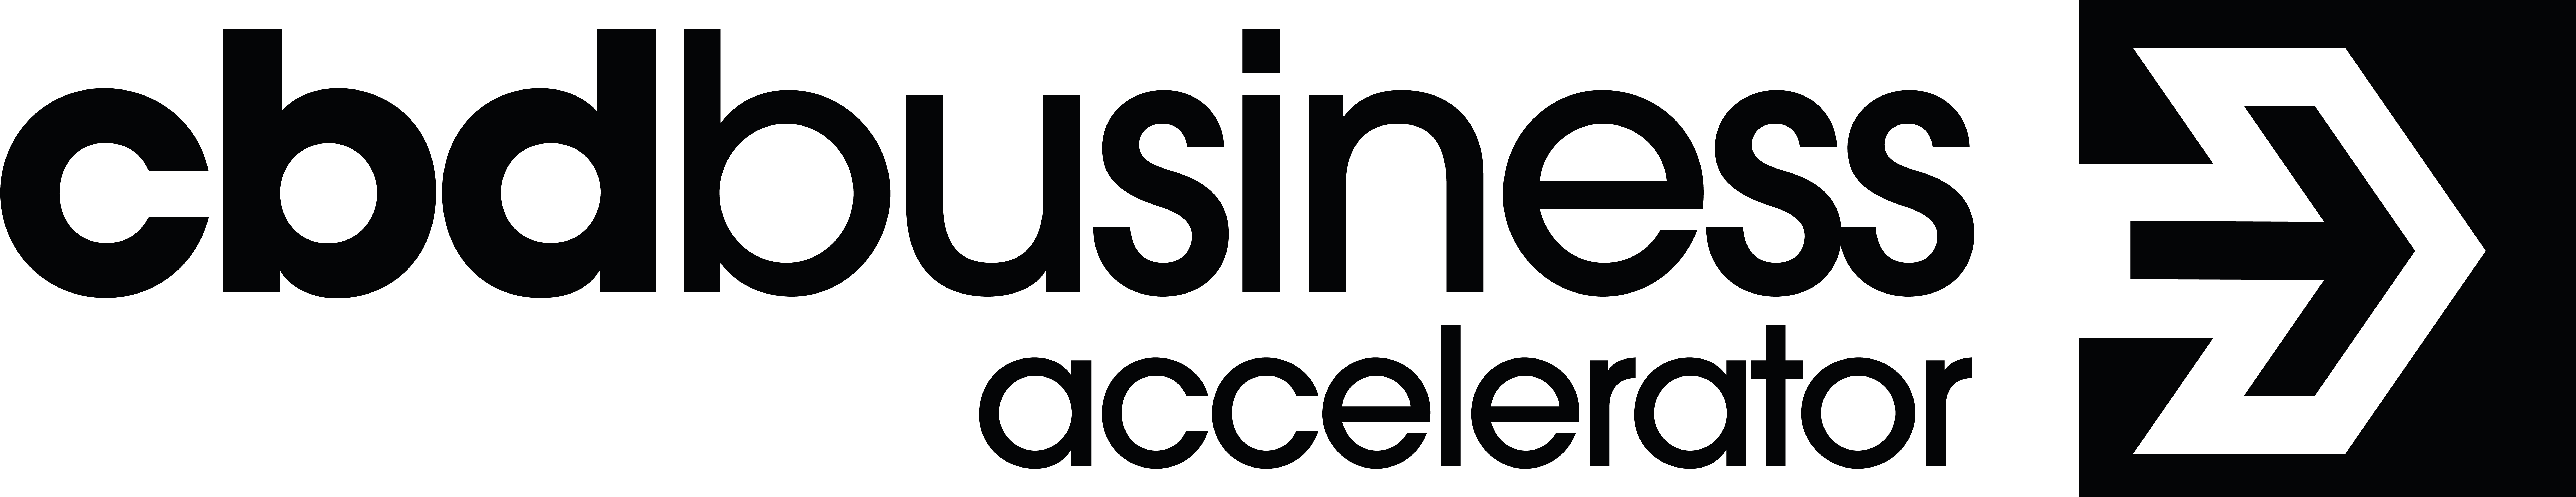 CBD Business Accelerator Logo